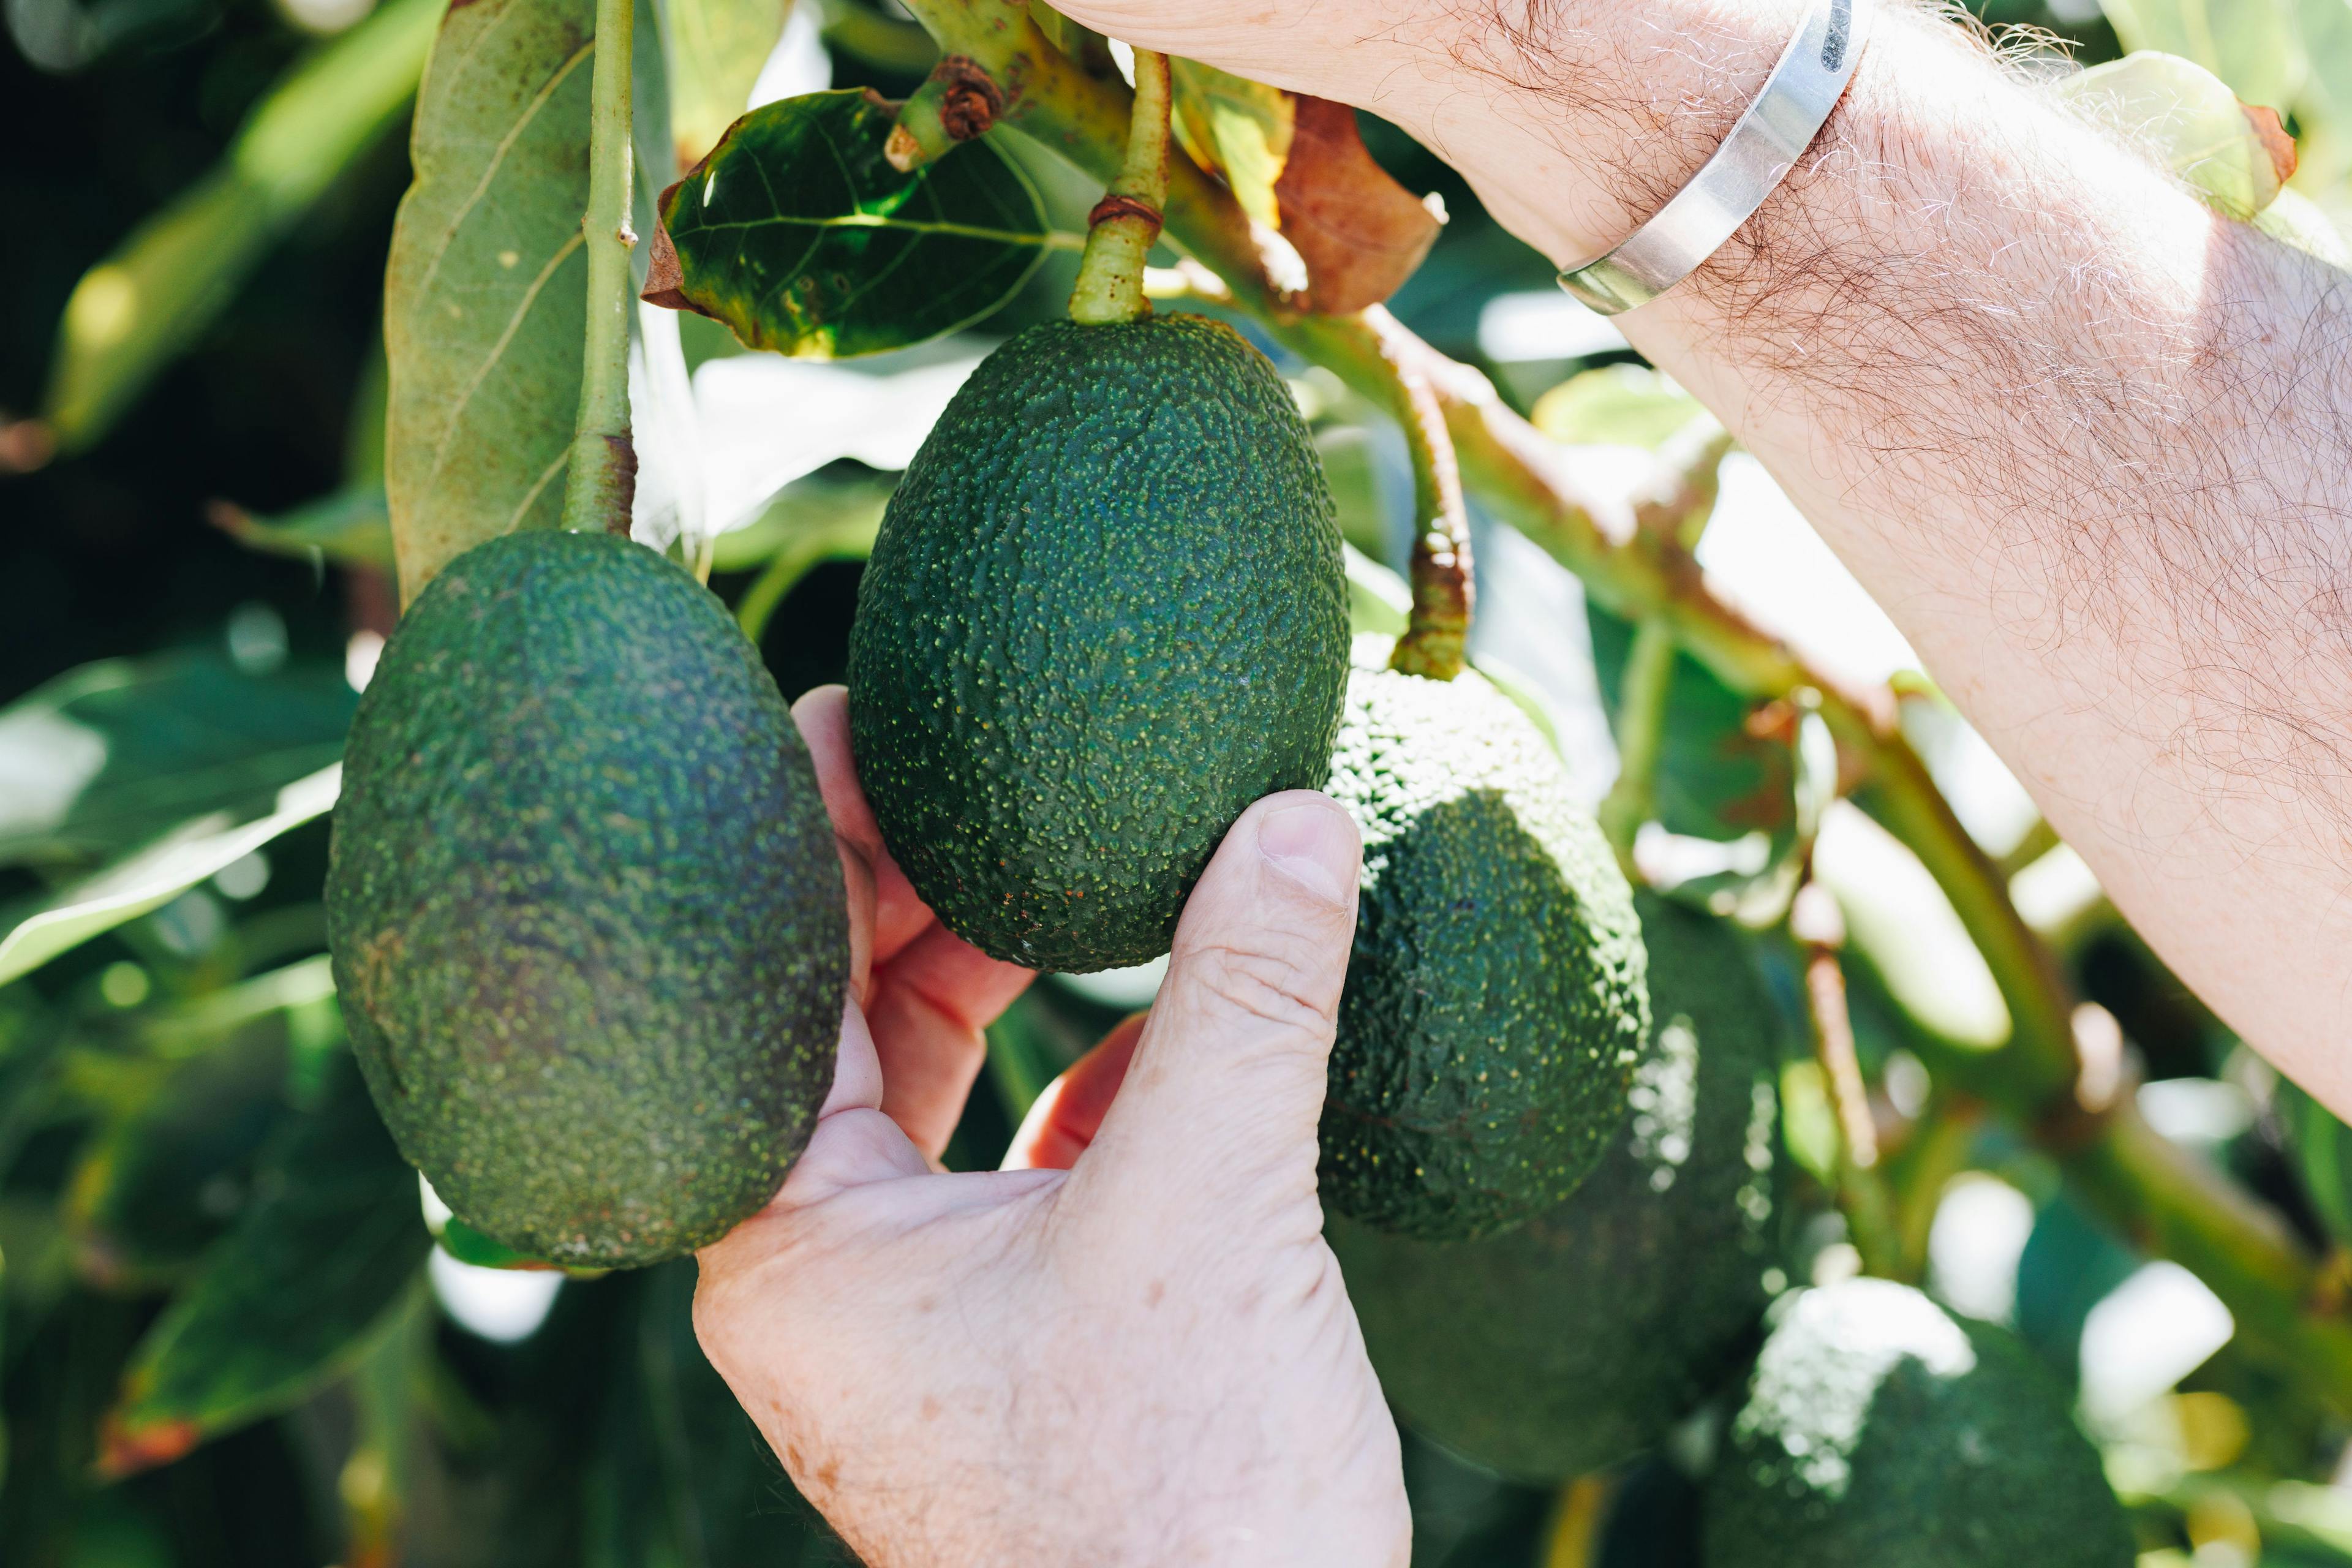 Morco farmer picking fresh avocado produce